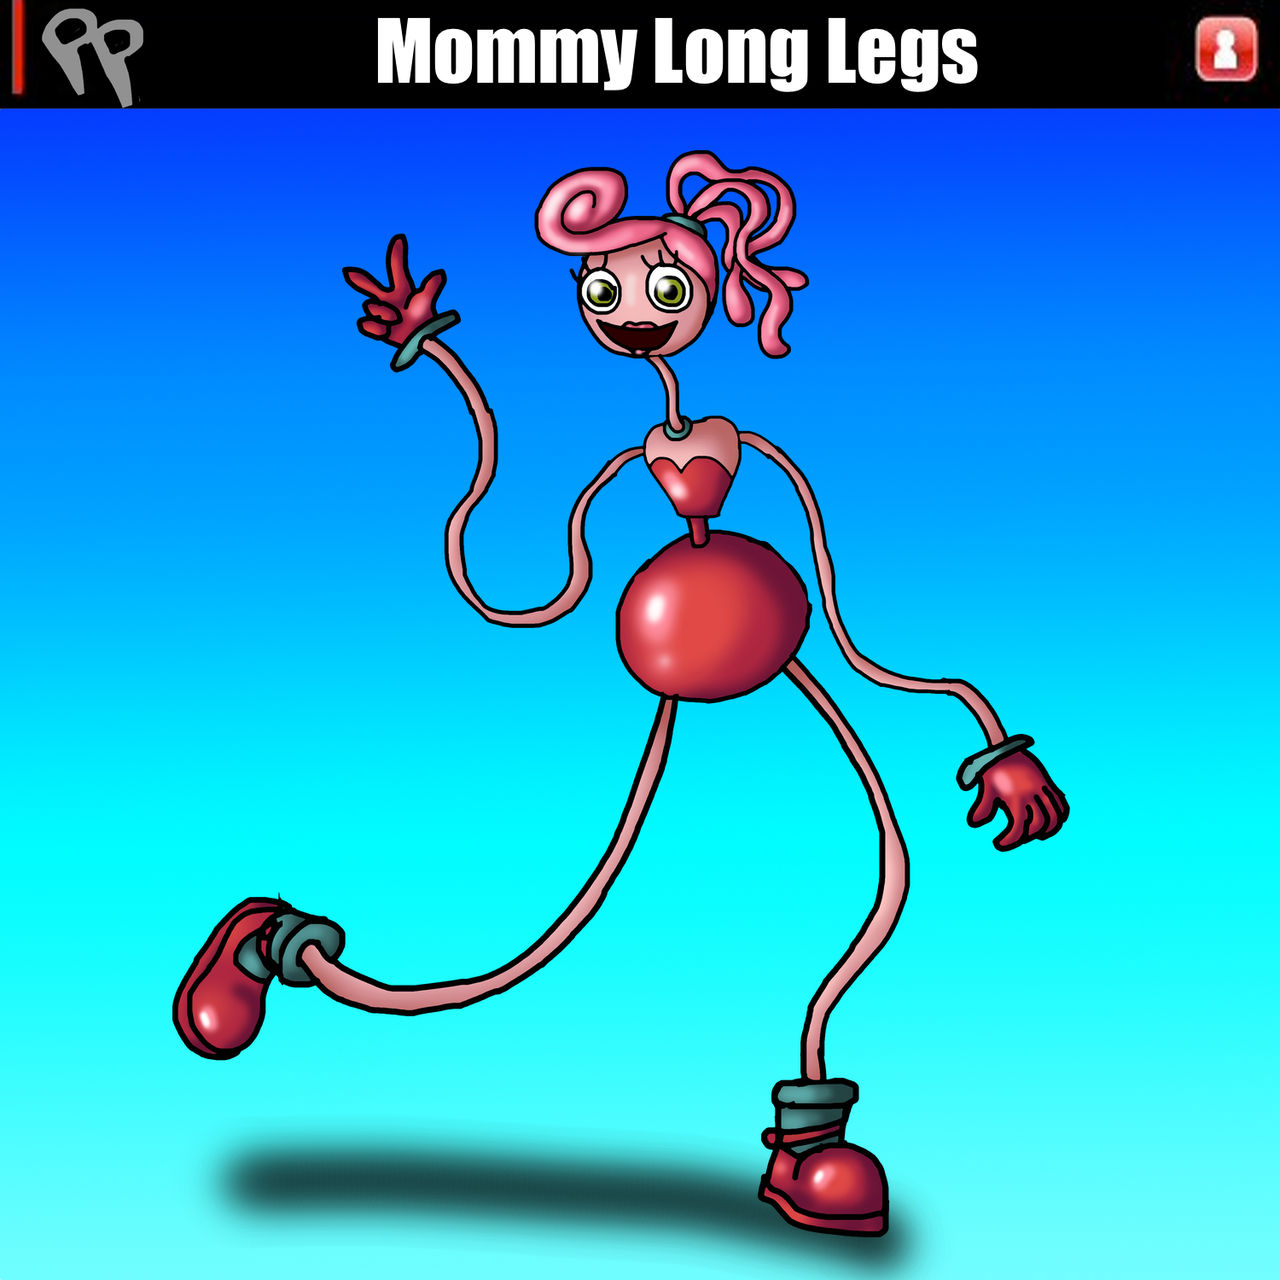 Mommy Longlegs Animation by CrossPadCastle on DeviantArt